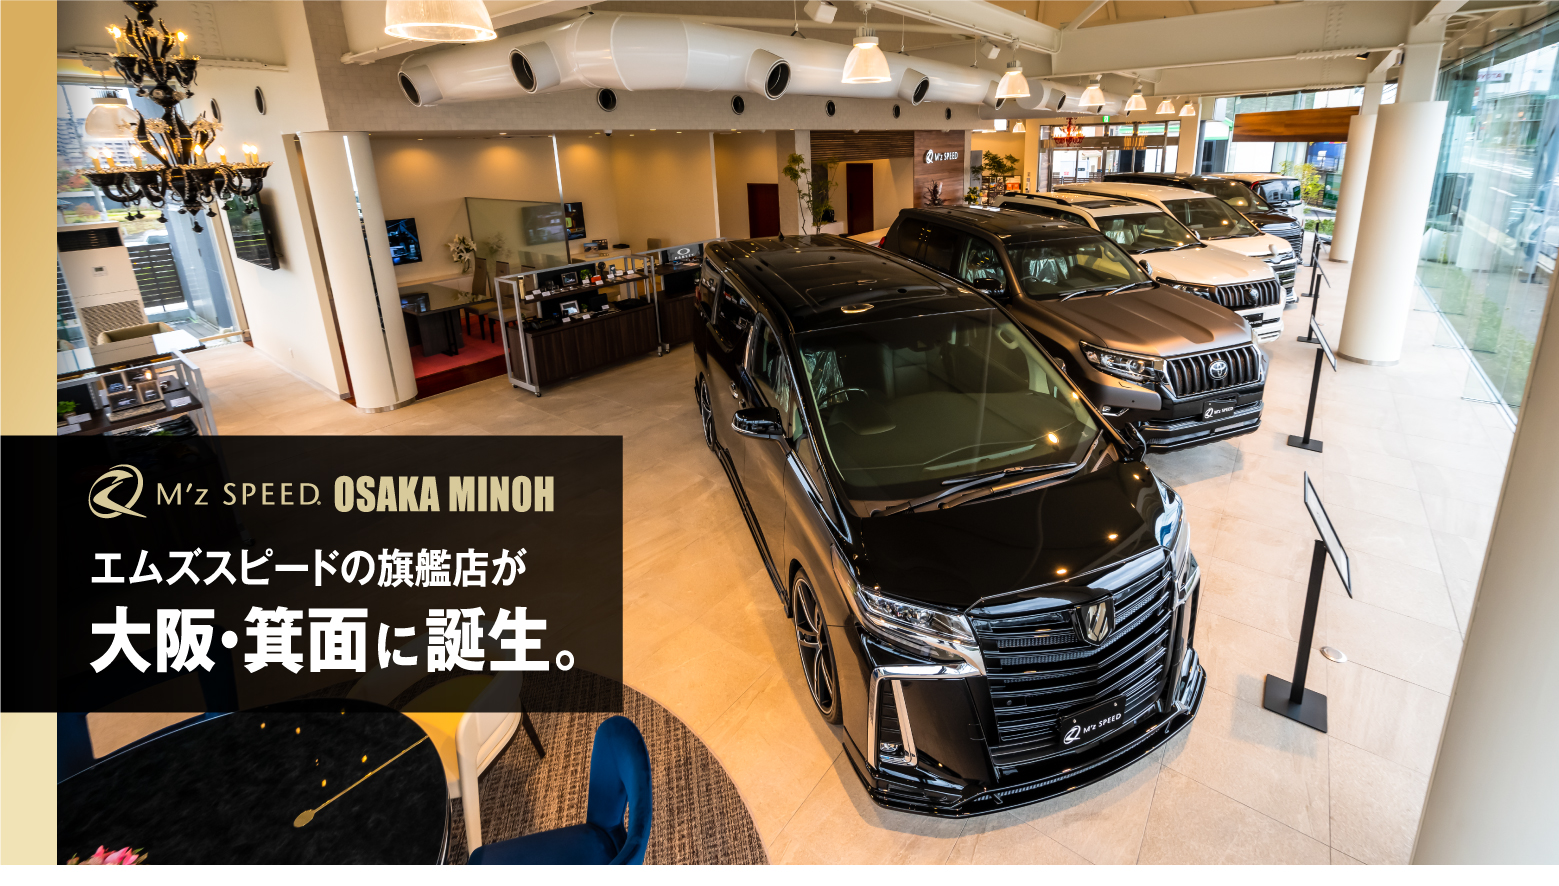 M'z SPEED OSAKA MINOH エムズスピードの旗艦店が大阪・箕面に誕生。